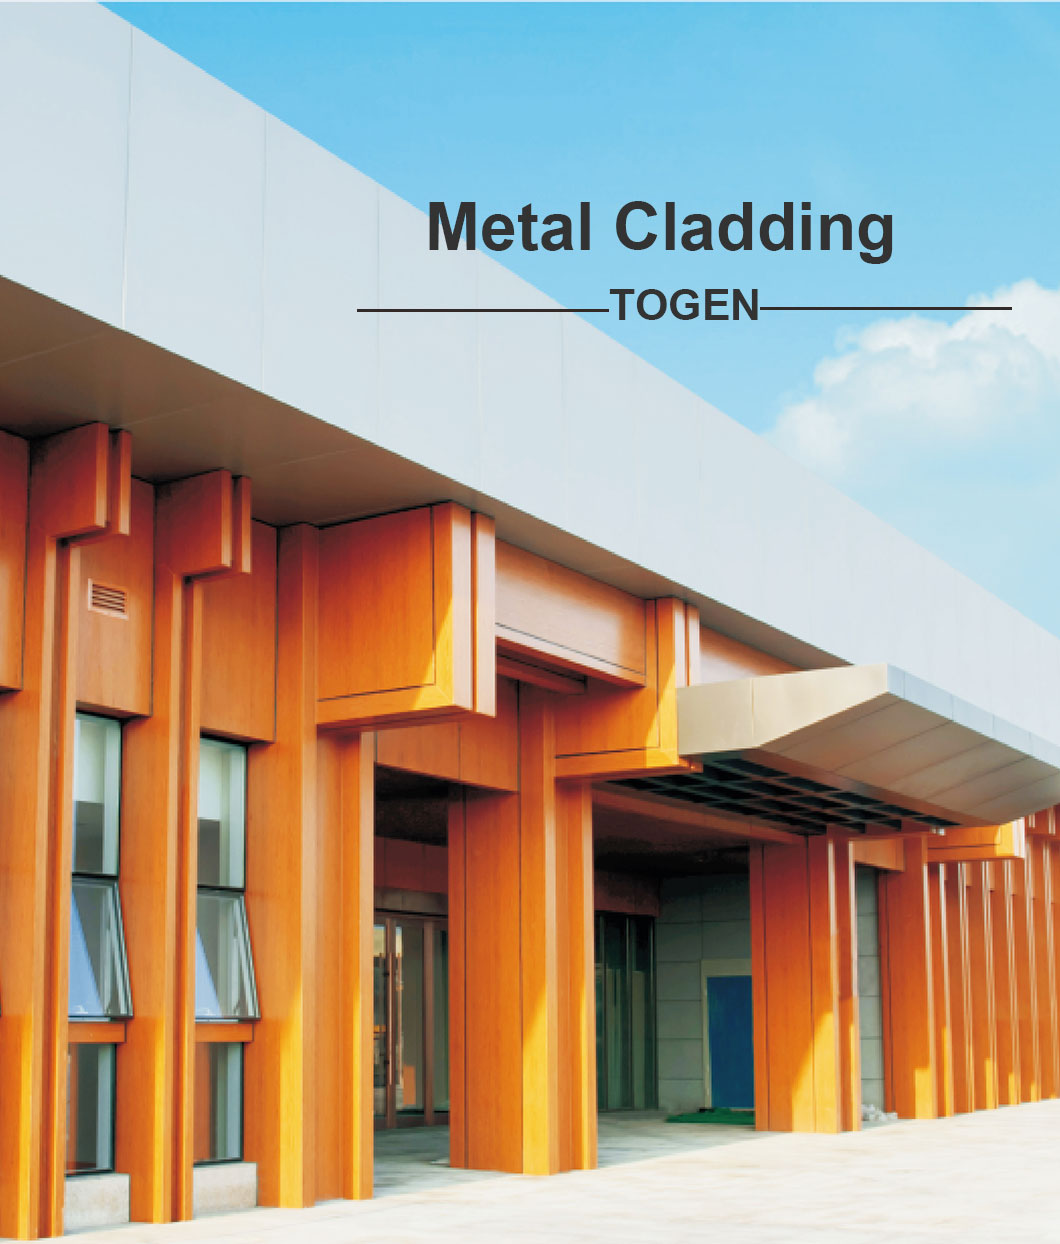 Togen Metal Cladding